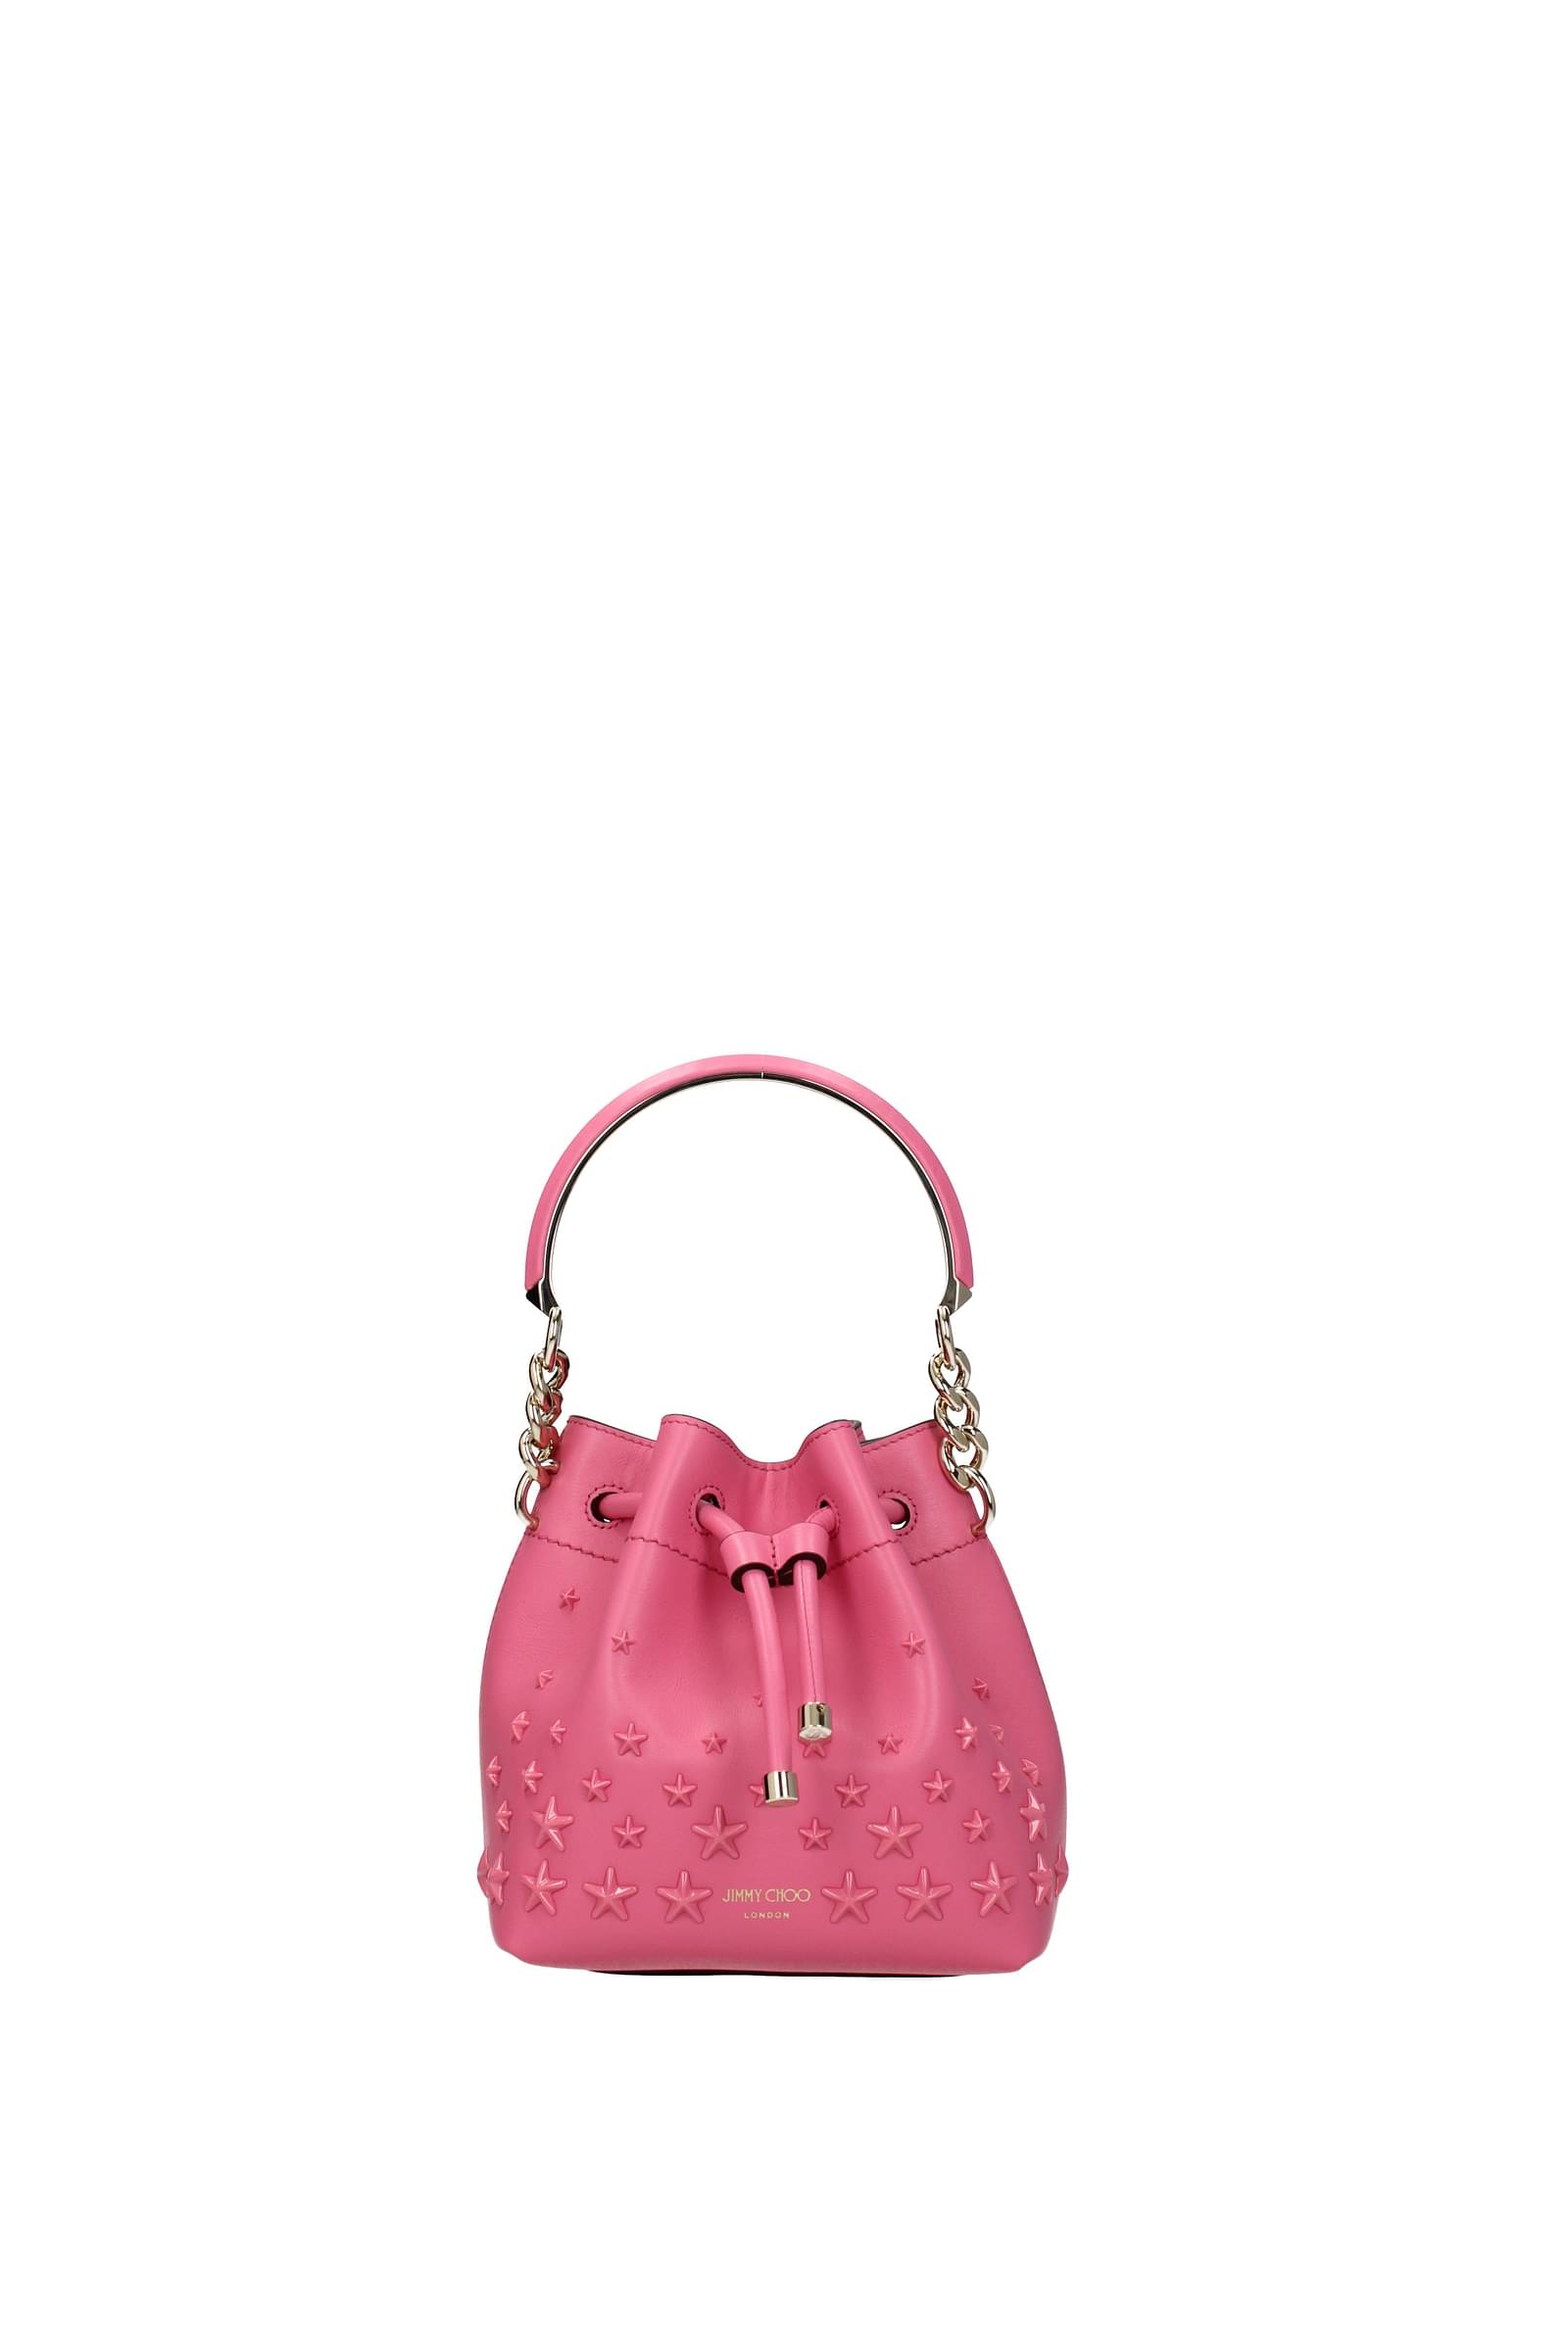 Shop Jimmy Choo Plain Elegant Style Logo Outlet Handbags by luckyfukurou |  BUYMA